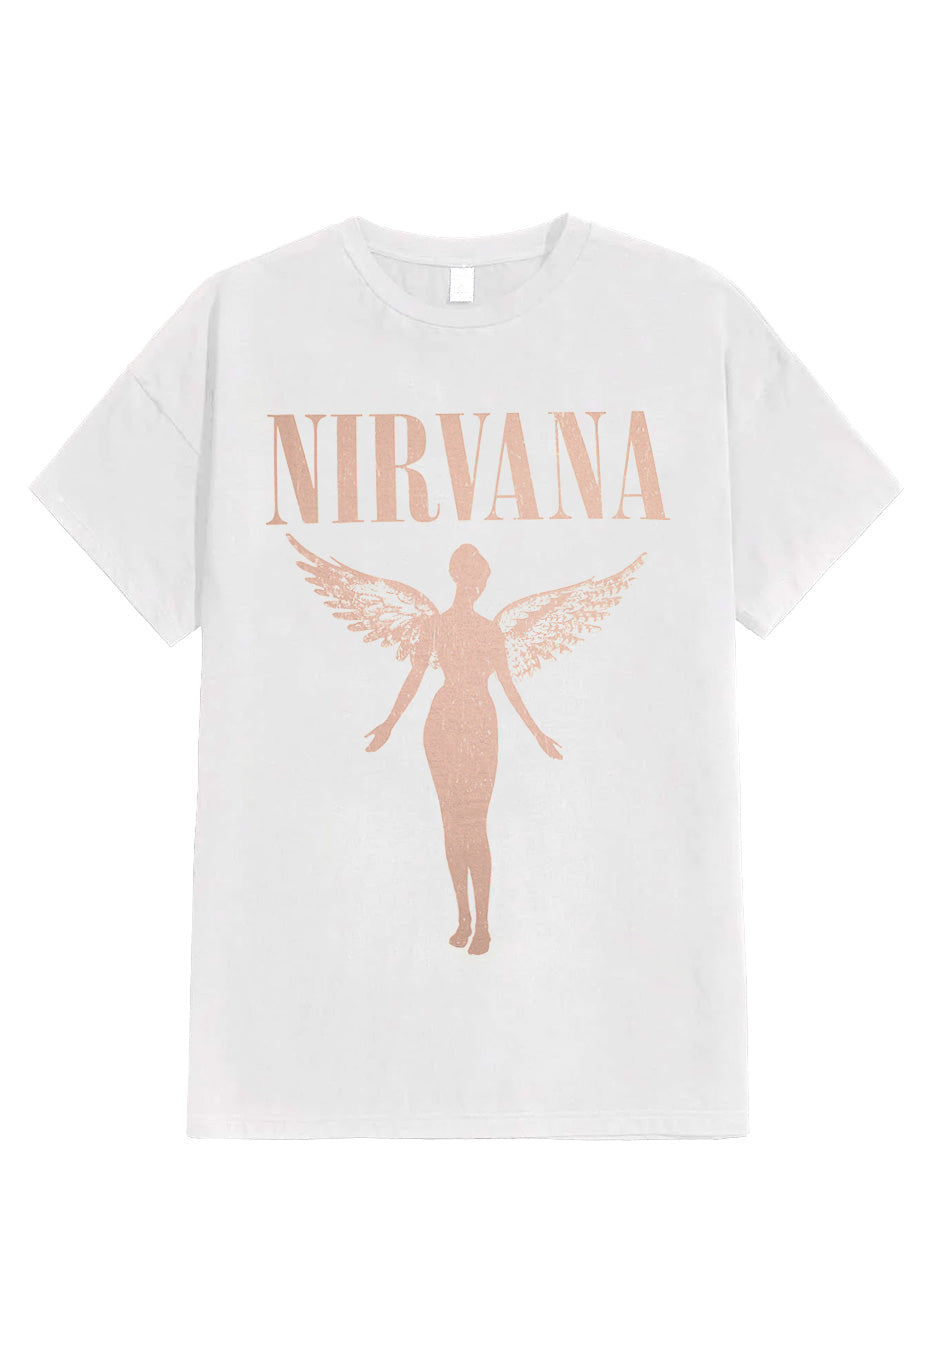 Nirvana - In Utero Tour White - T-Shirt | Nuclear Blast